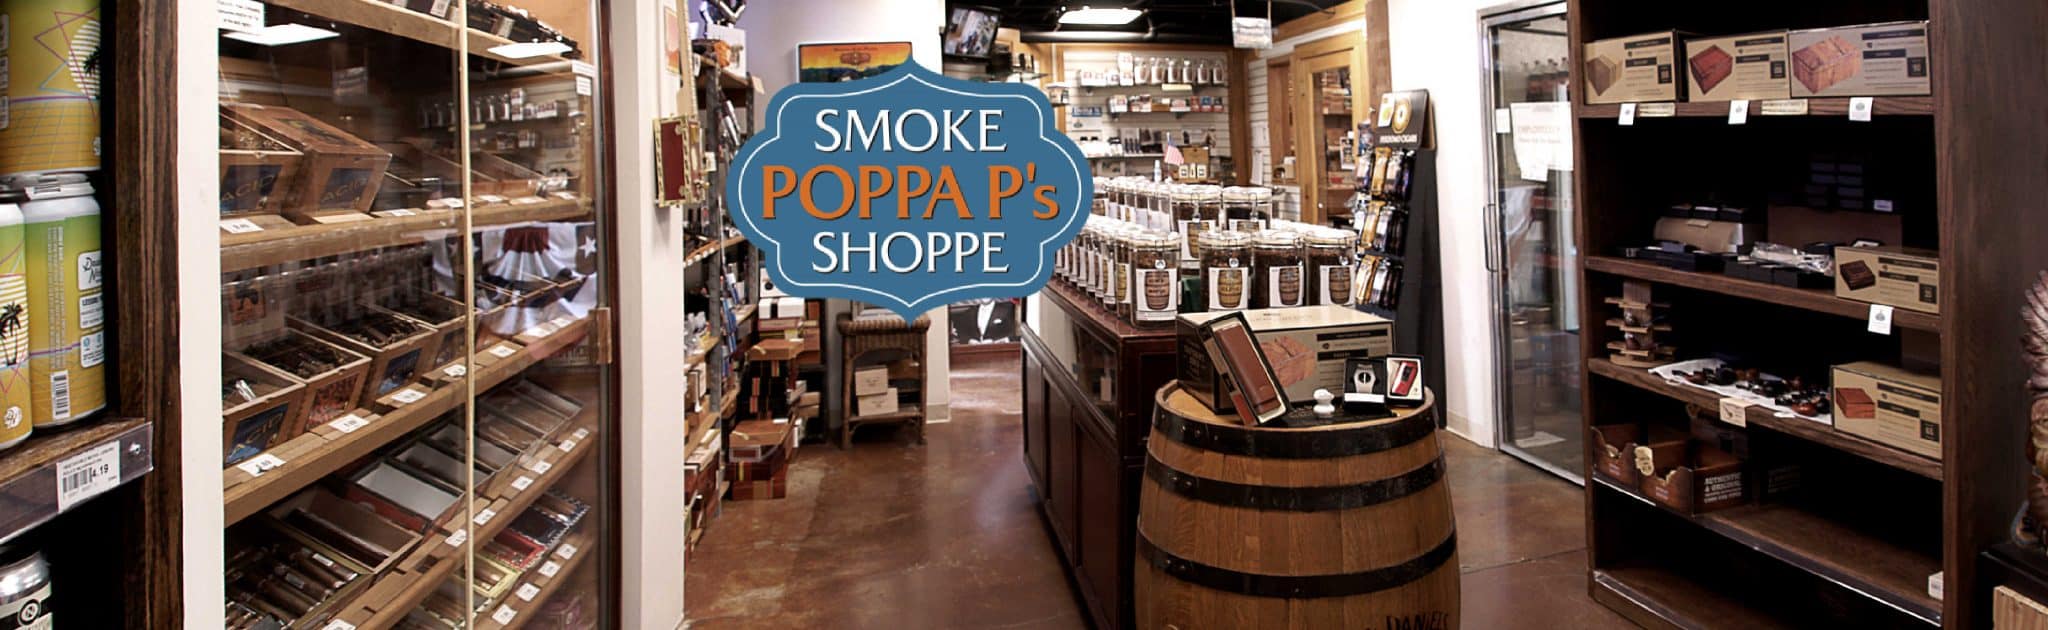 image of poppa ps smoke shop in franklin ts